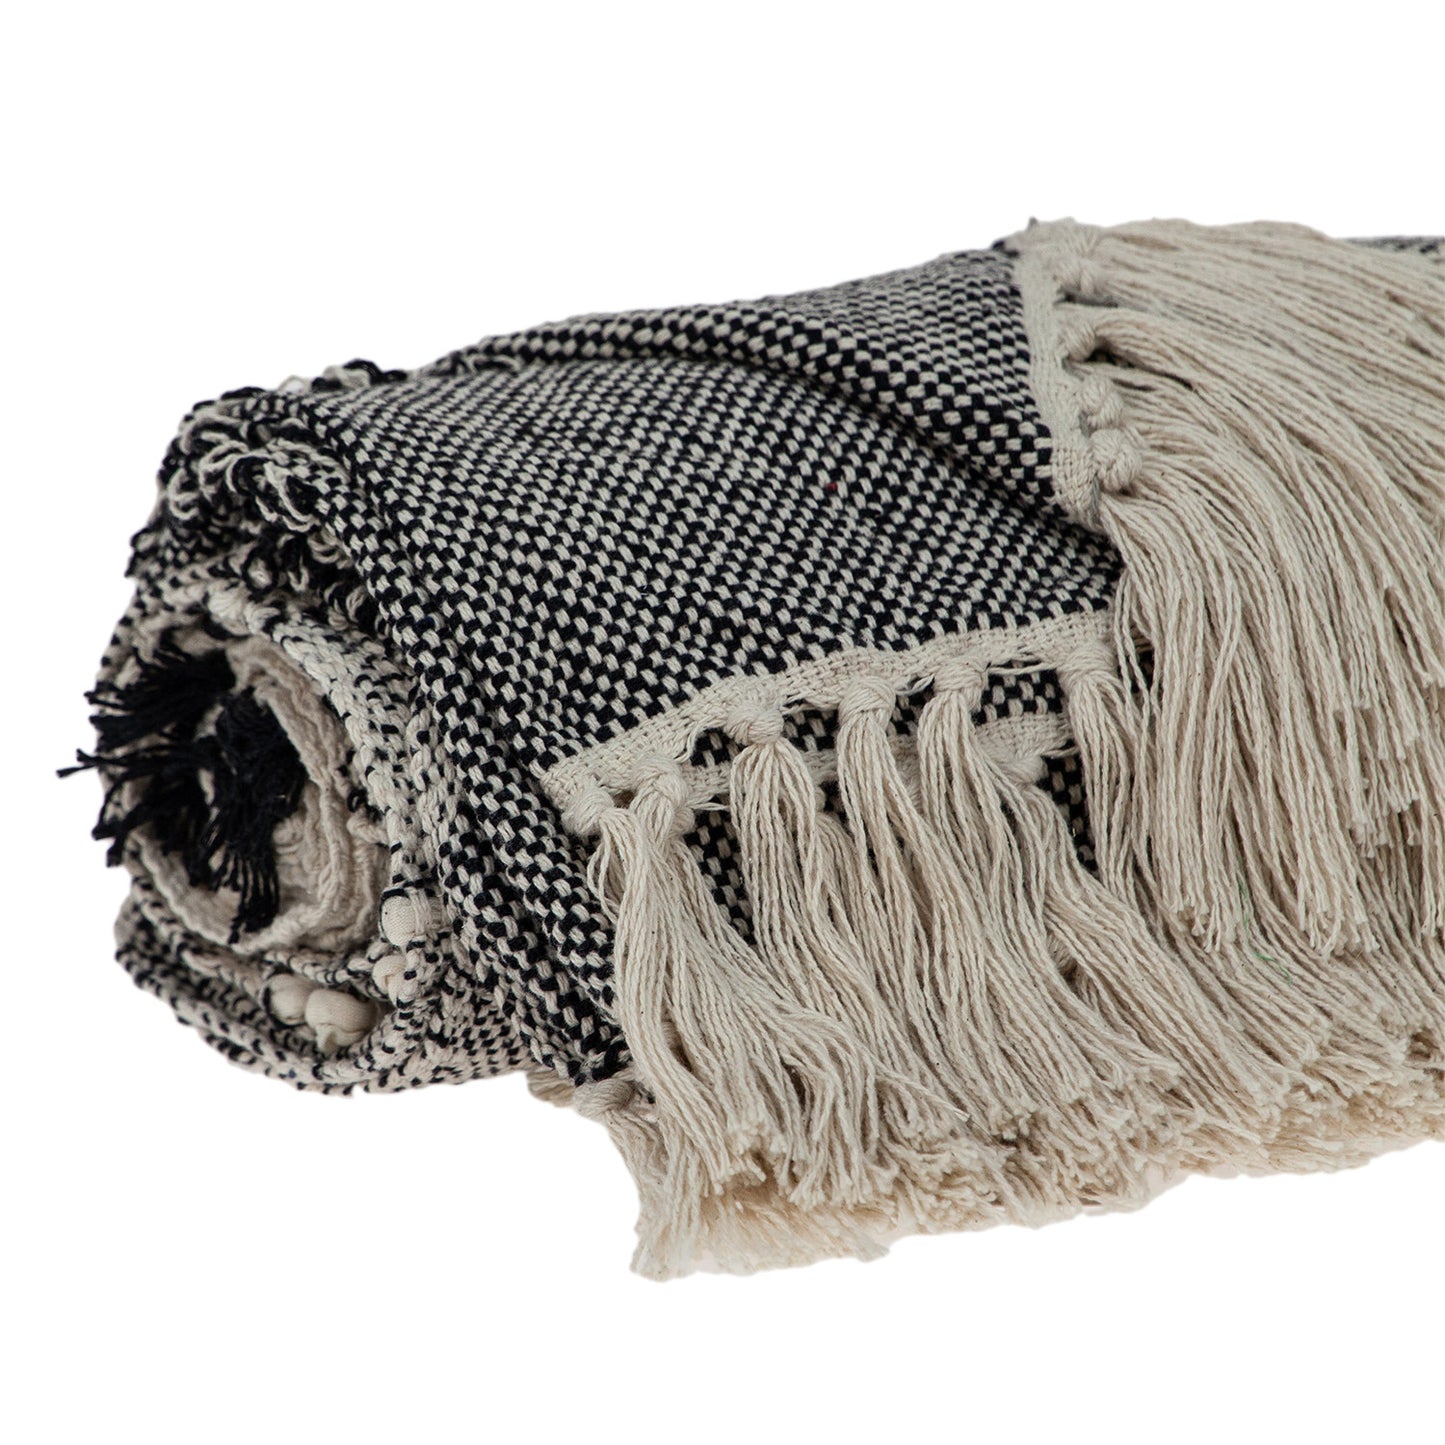 Boho Beige and Black Handloom Weave Throw with Decorative Tassels